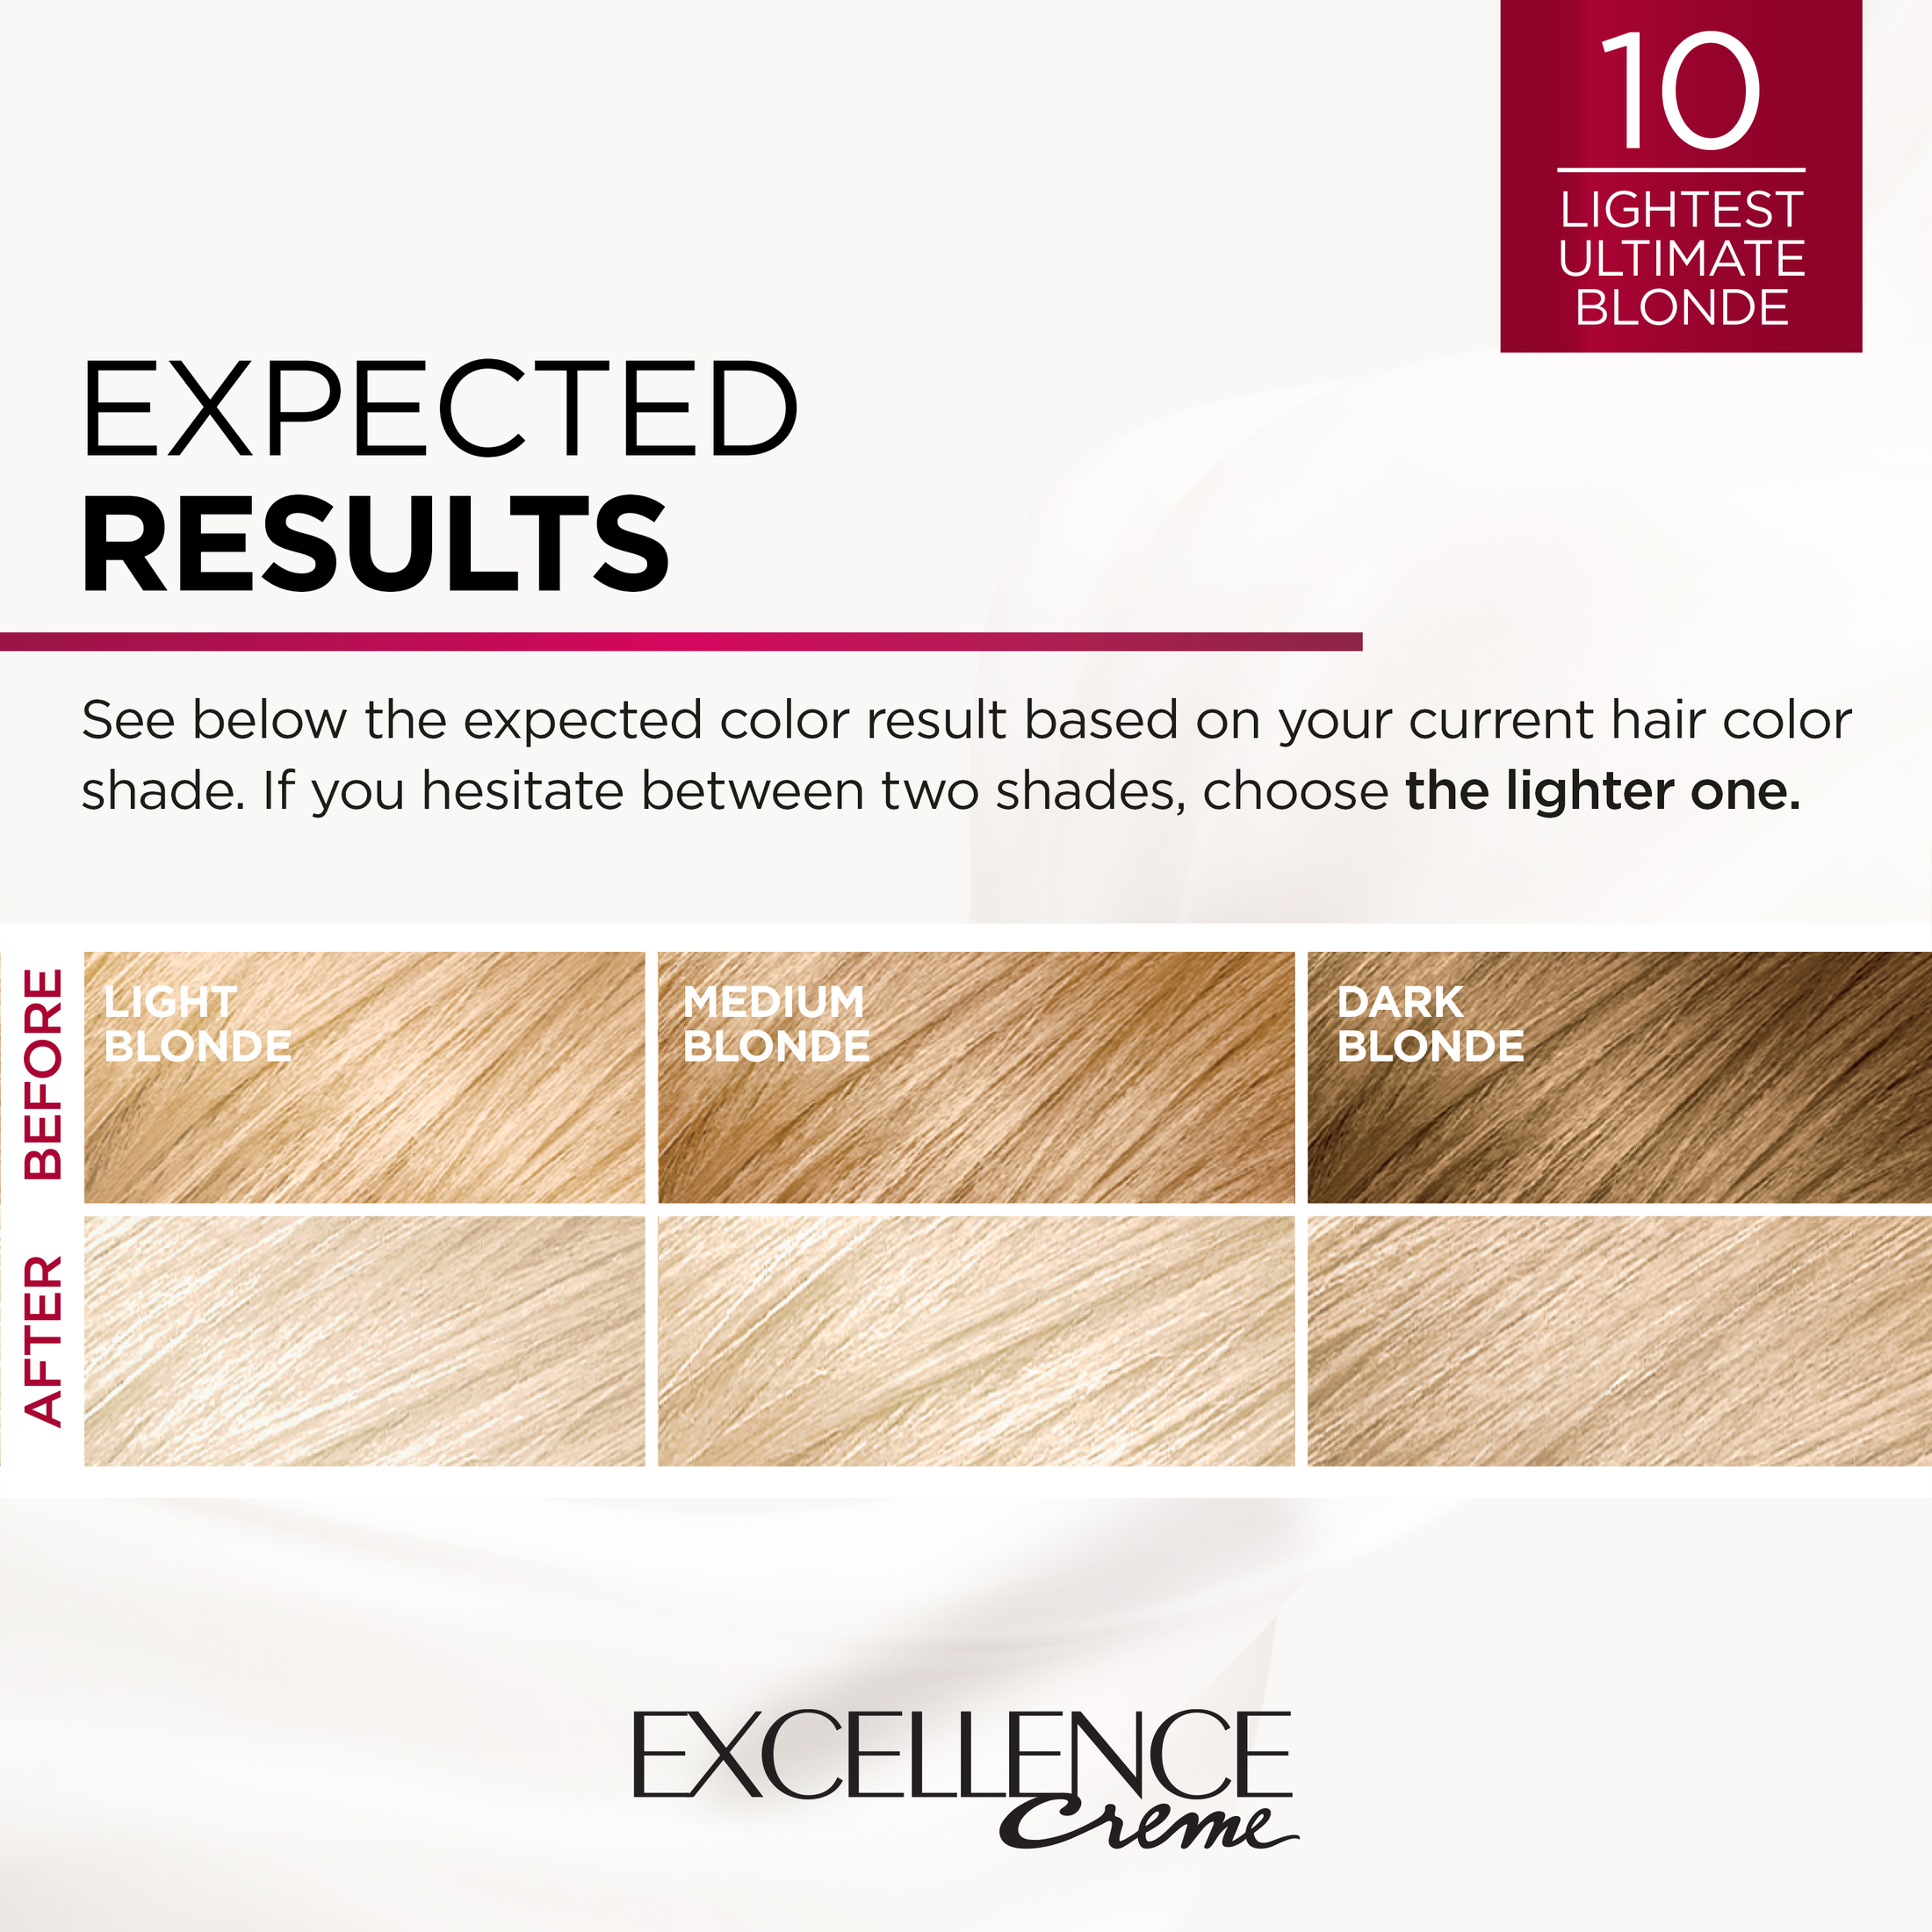 L'Oreal Paris Excellence Creme Permanent Hair Color, 10 Lightest Ultimate Blonde - image 5 of 8